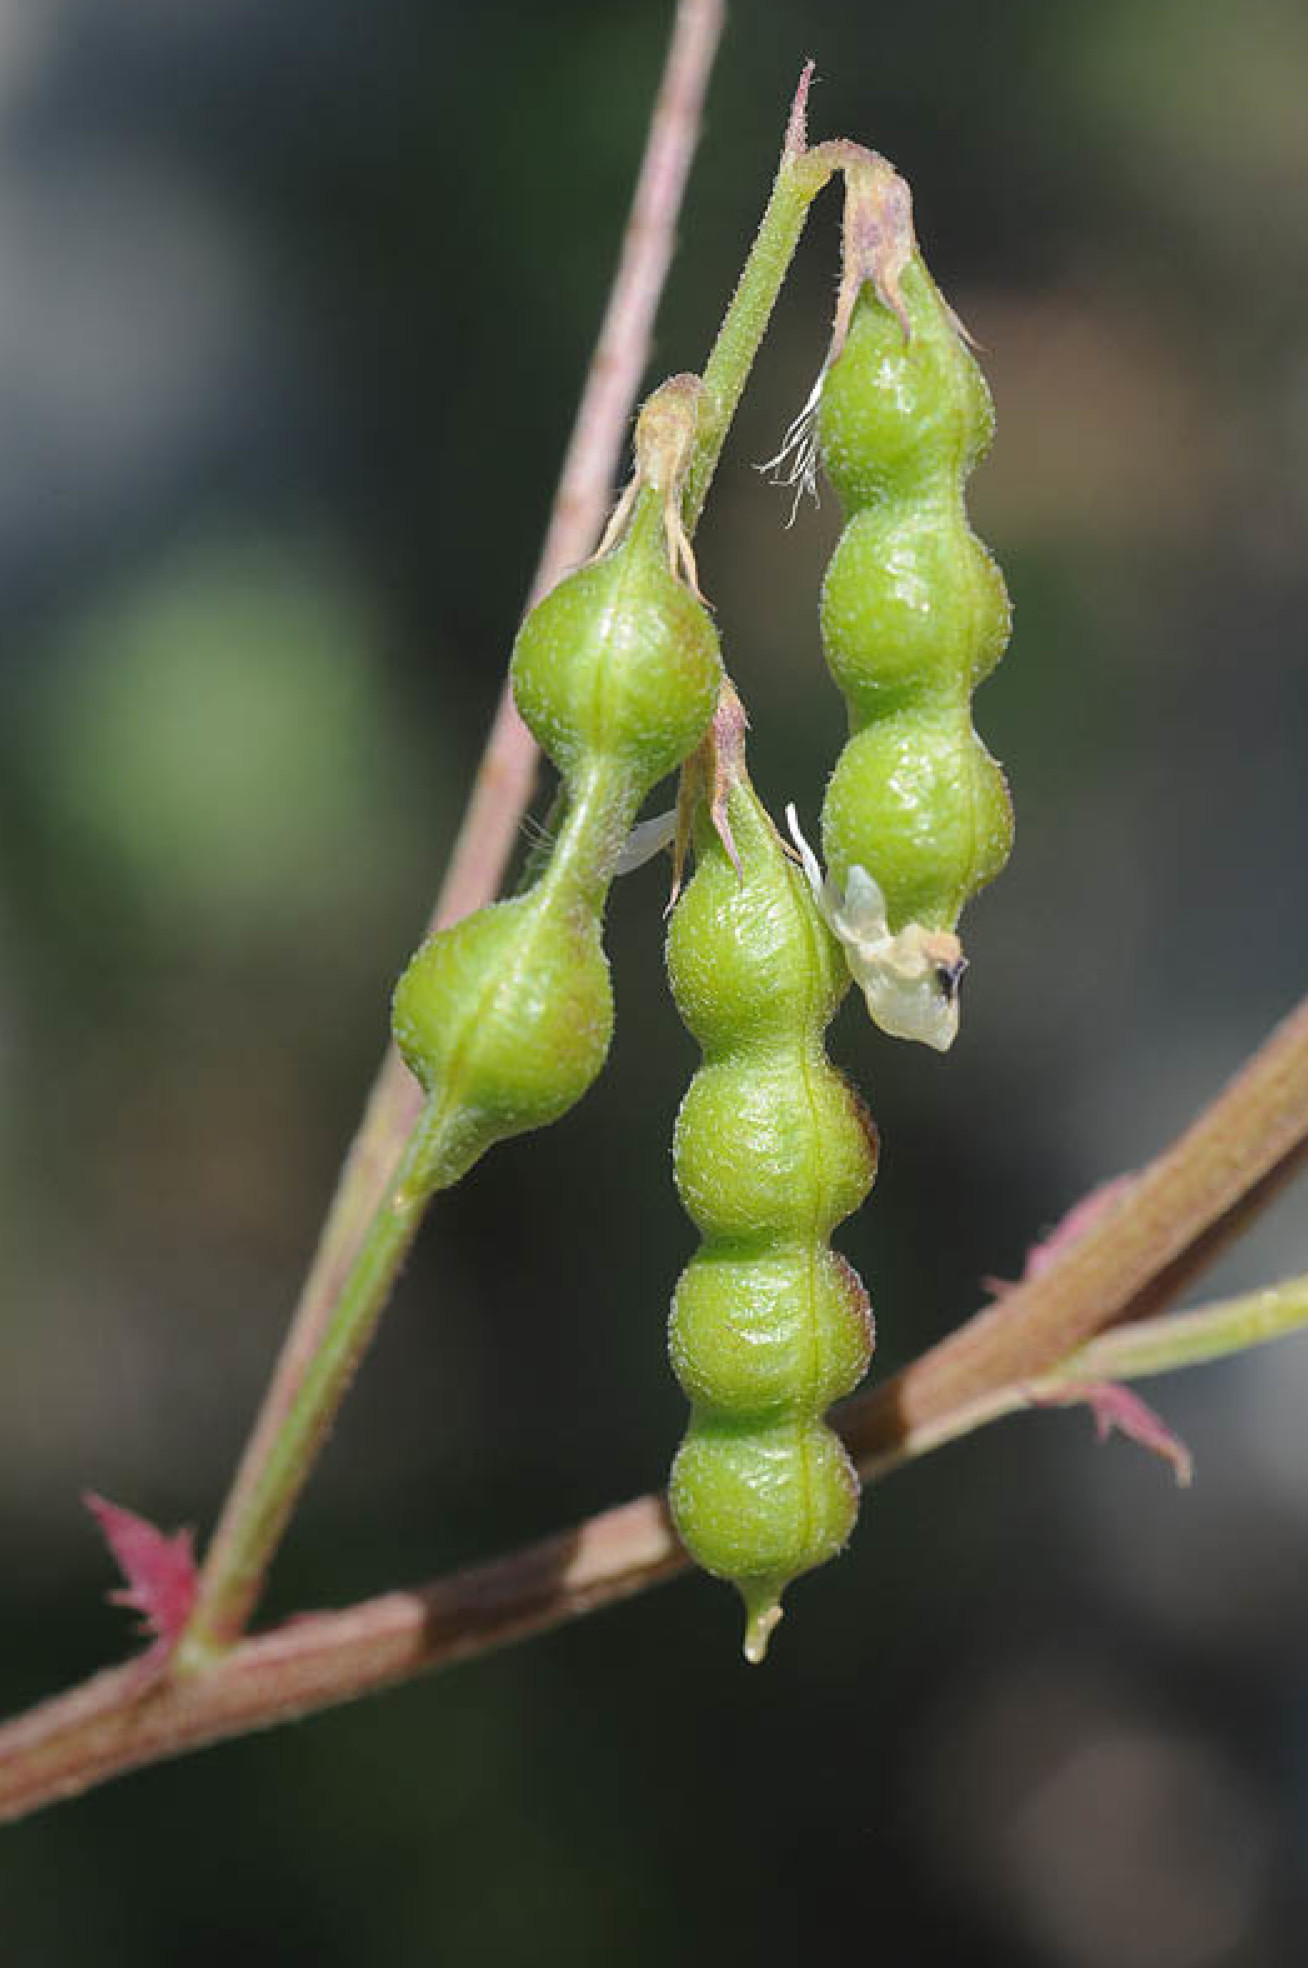 Bulbous green string-like plant